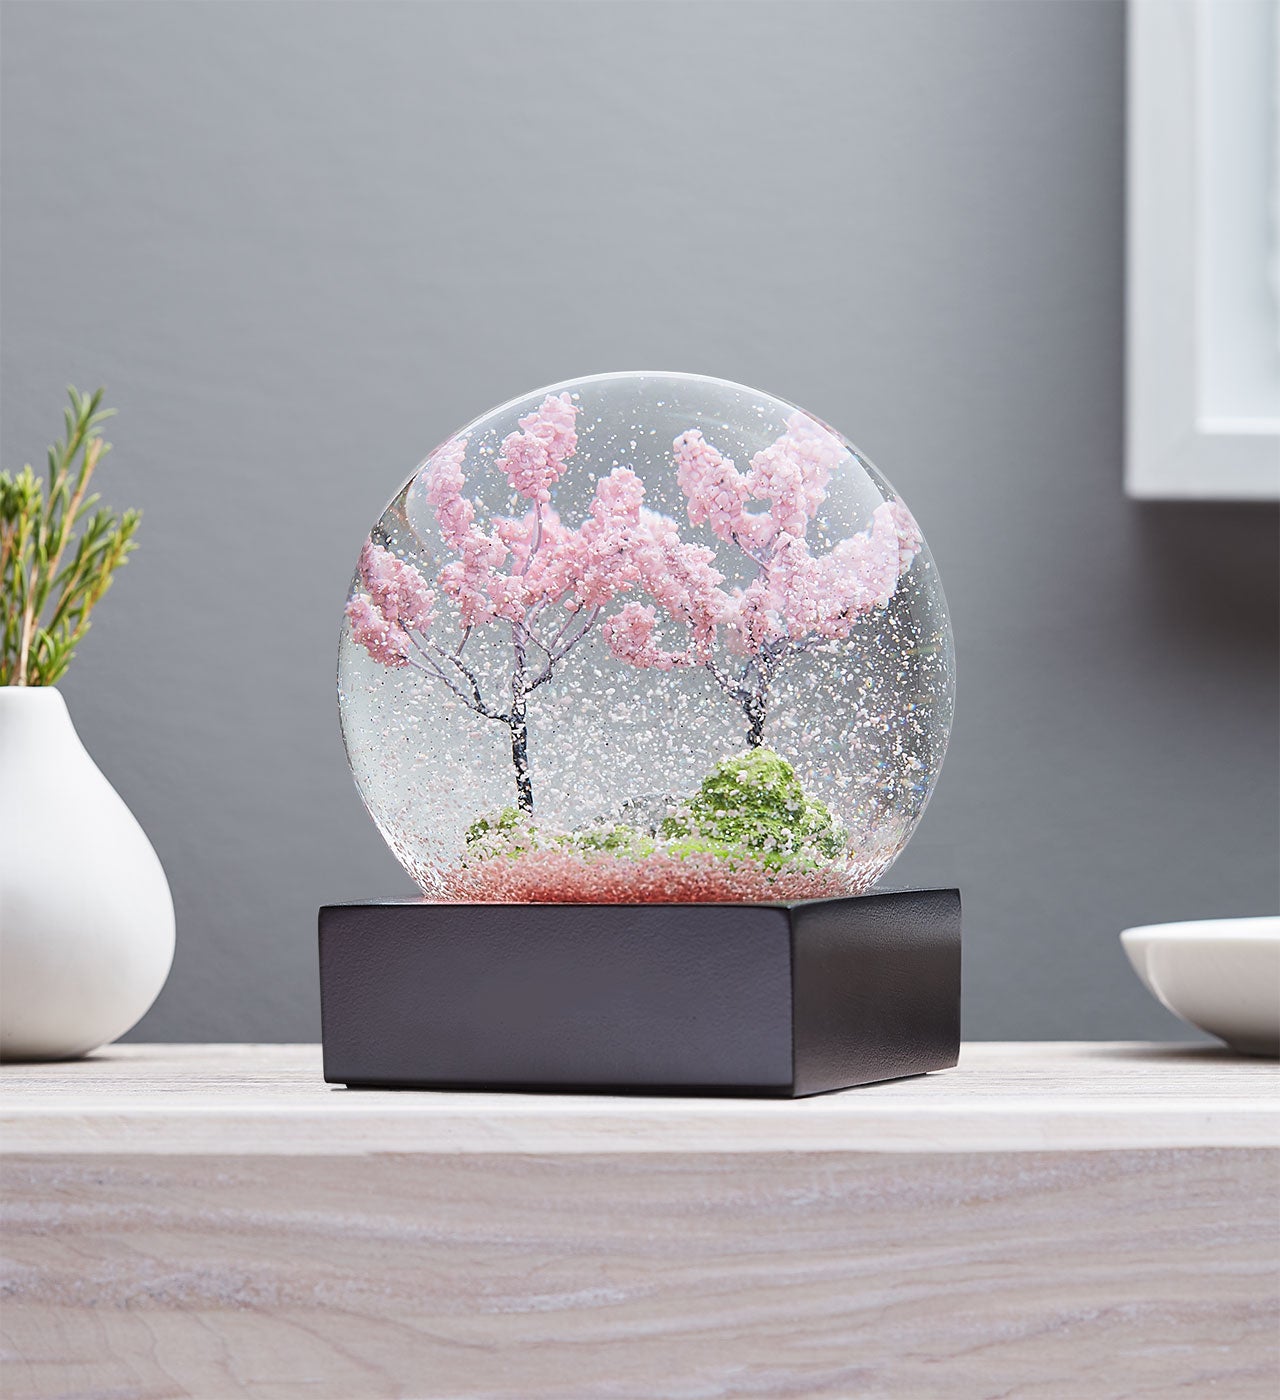 Cherry Blossom Snow Globe by Cool Snow Globes